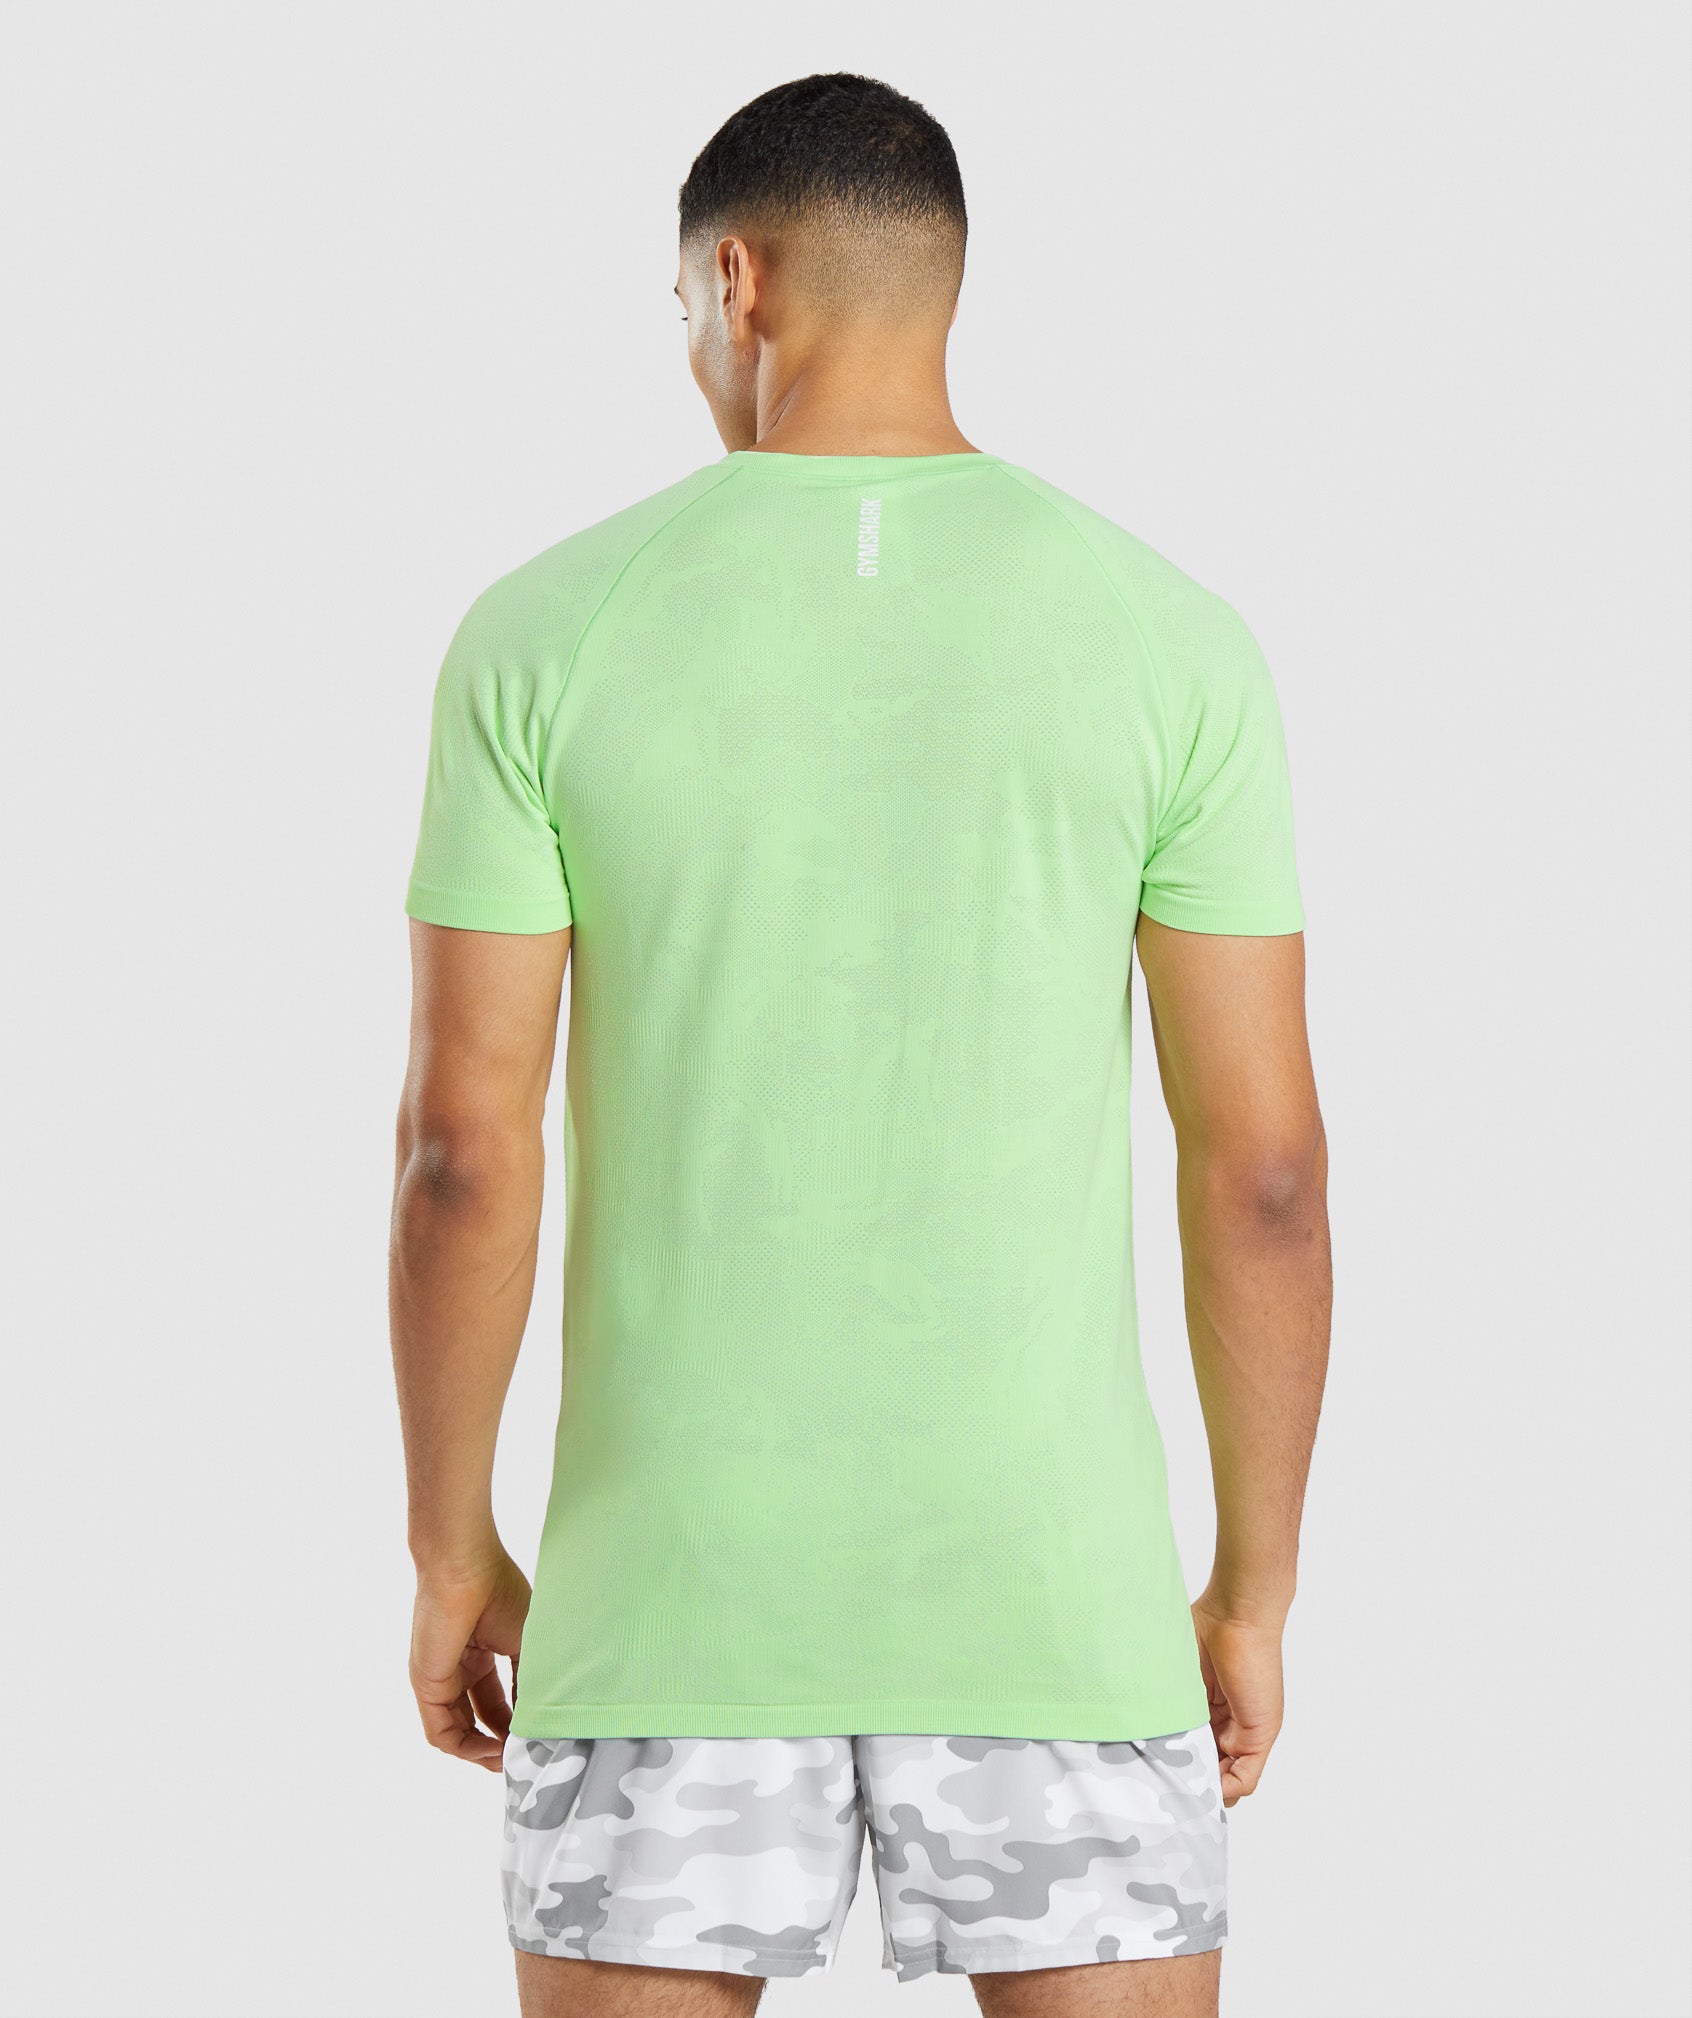 Geo Seamless T-Shirt in Bali Green/White - view 2